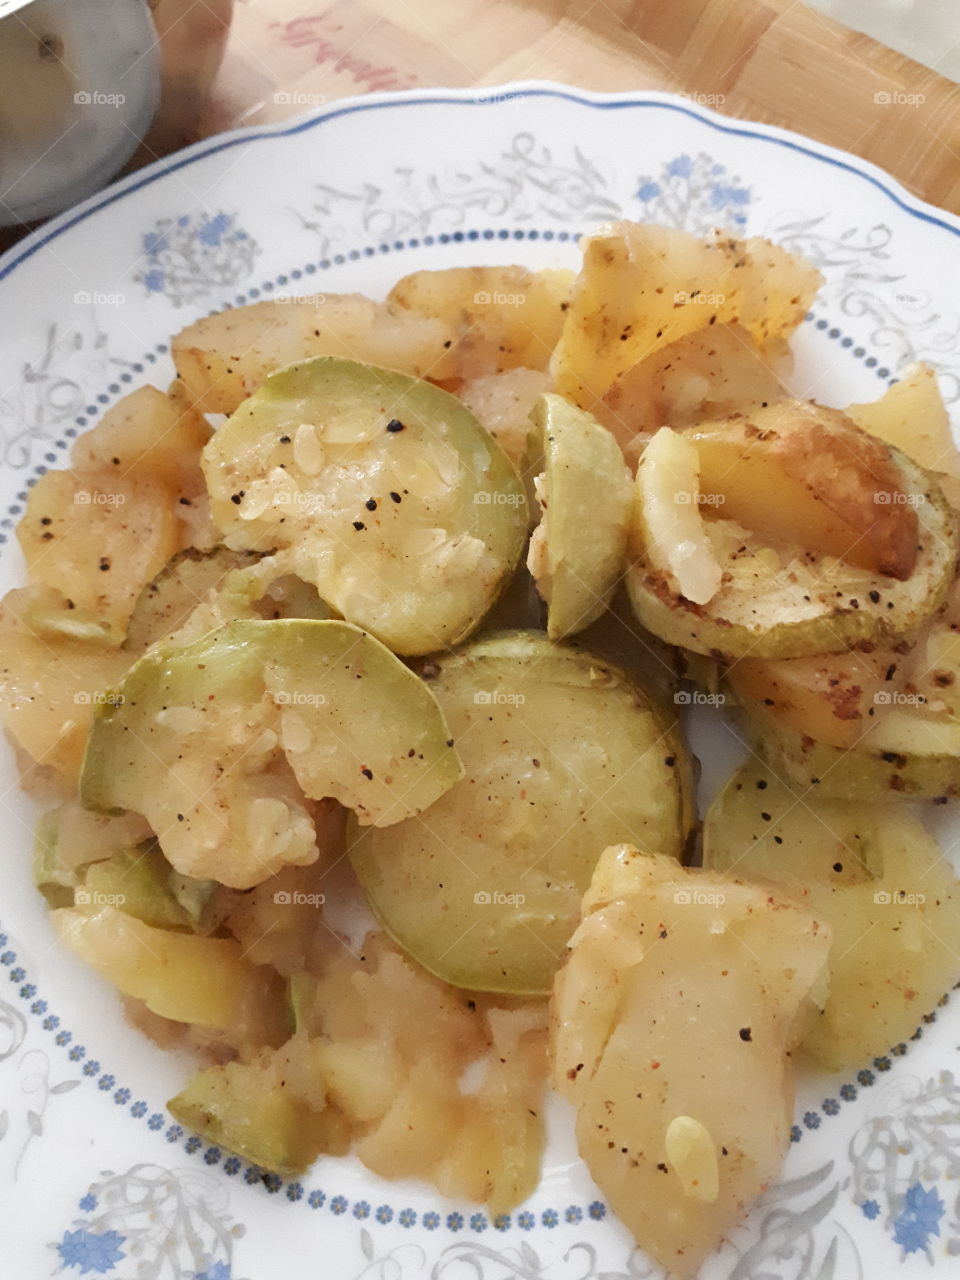 zucchini and potatoes